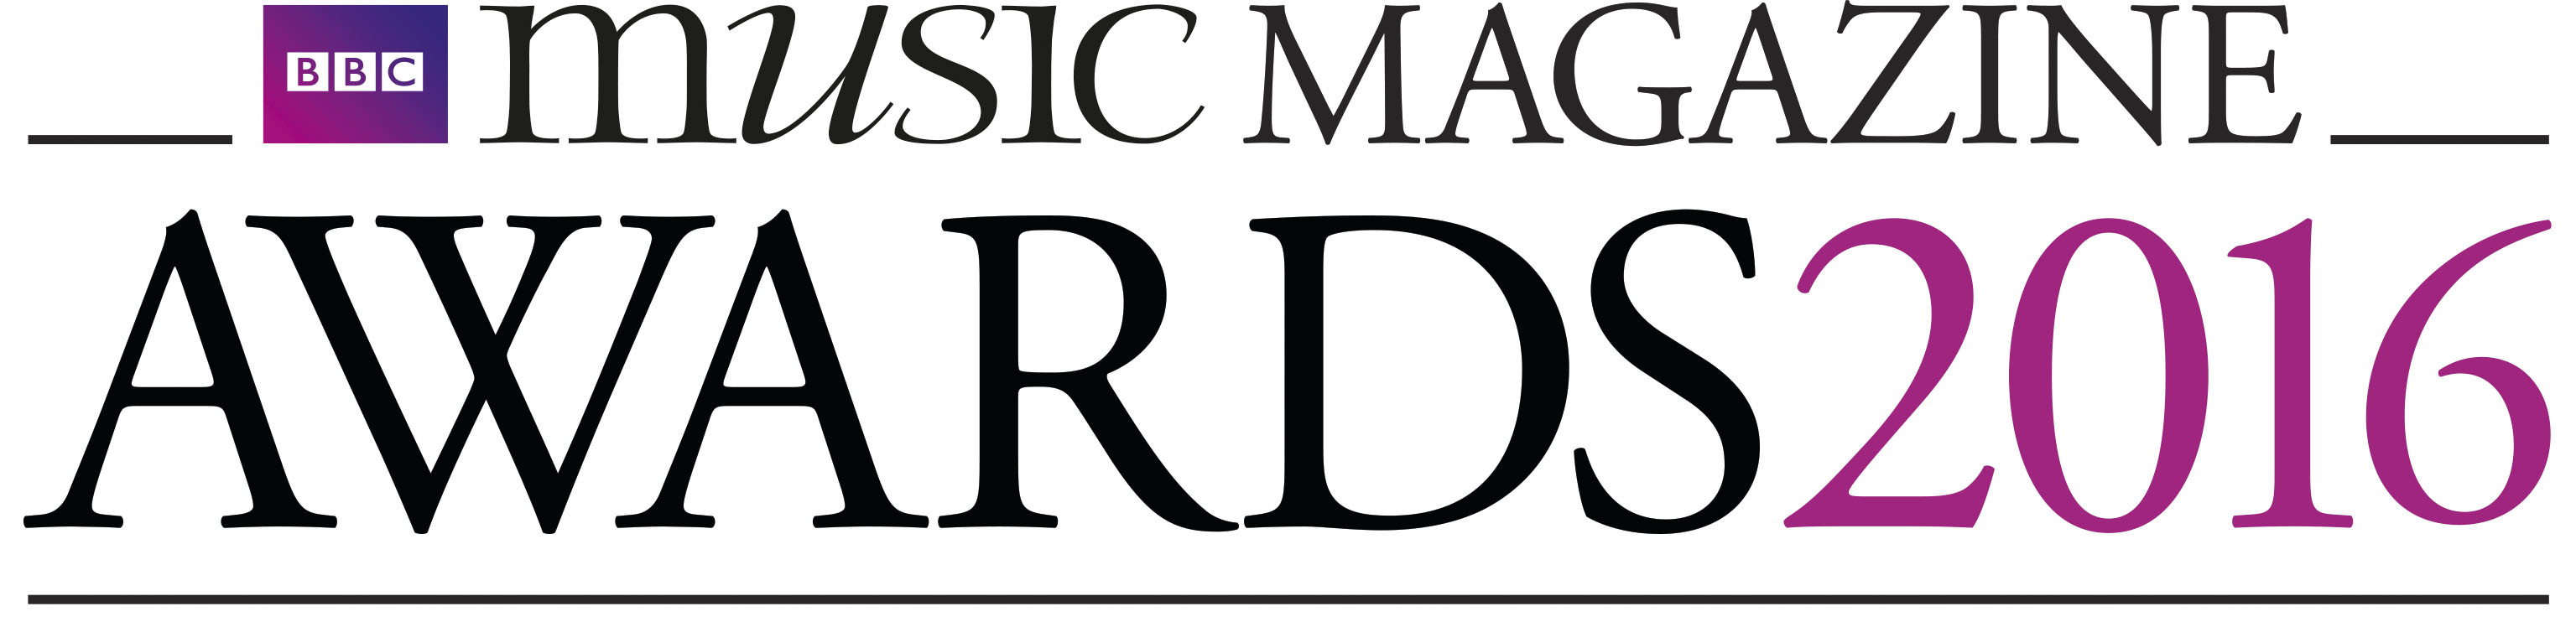 BBC Music Magazine Awards 2016